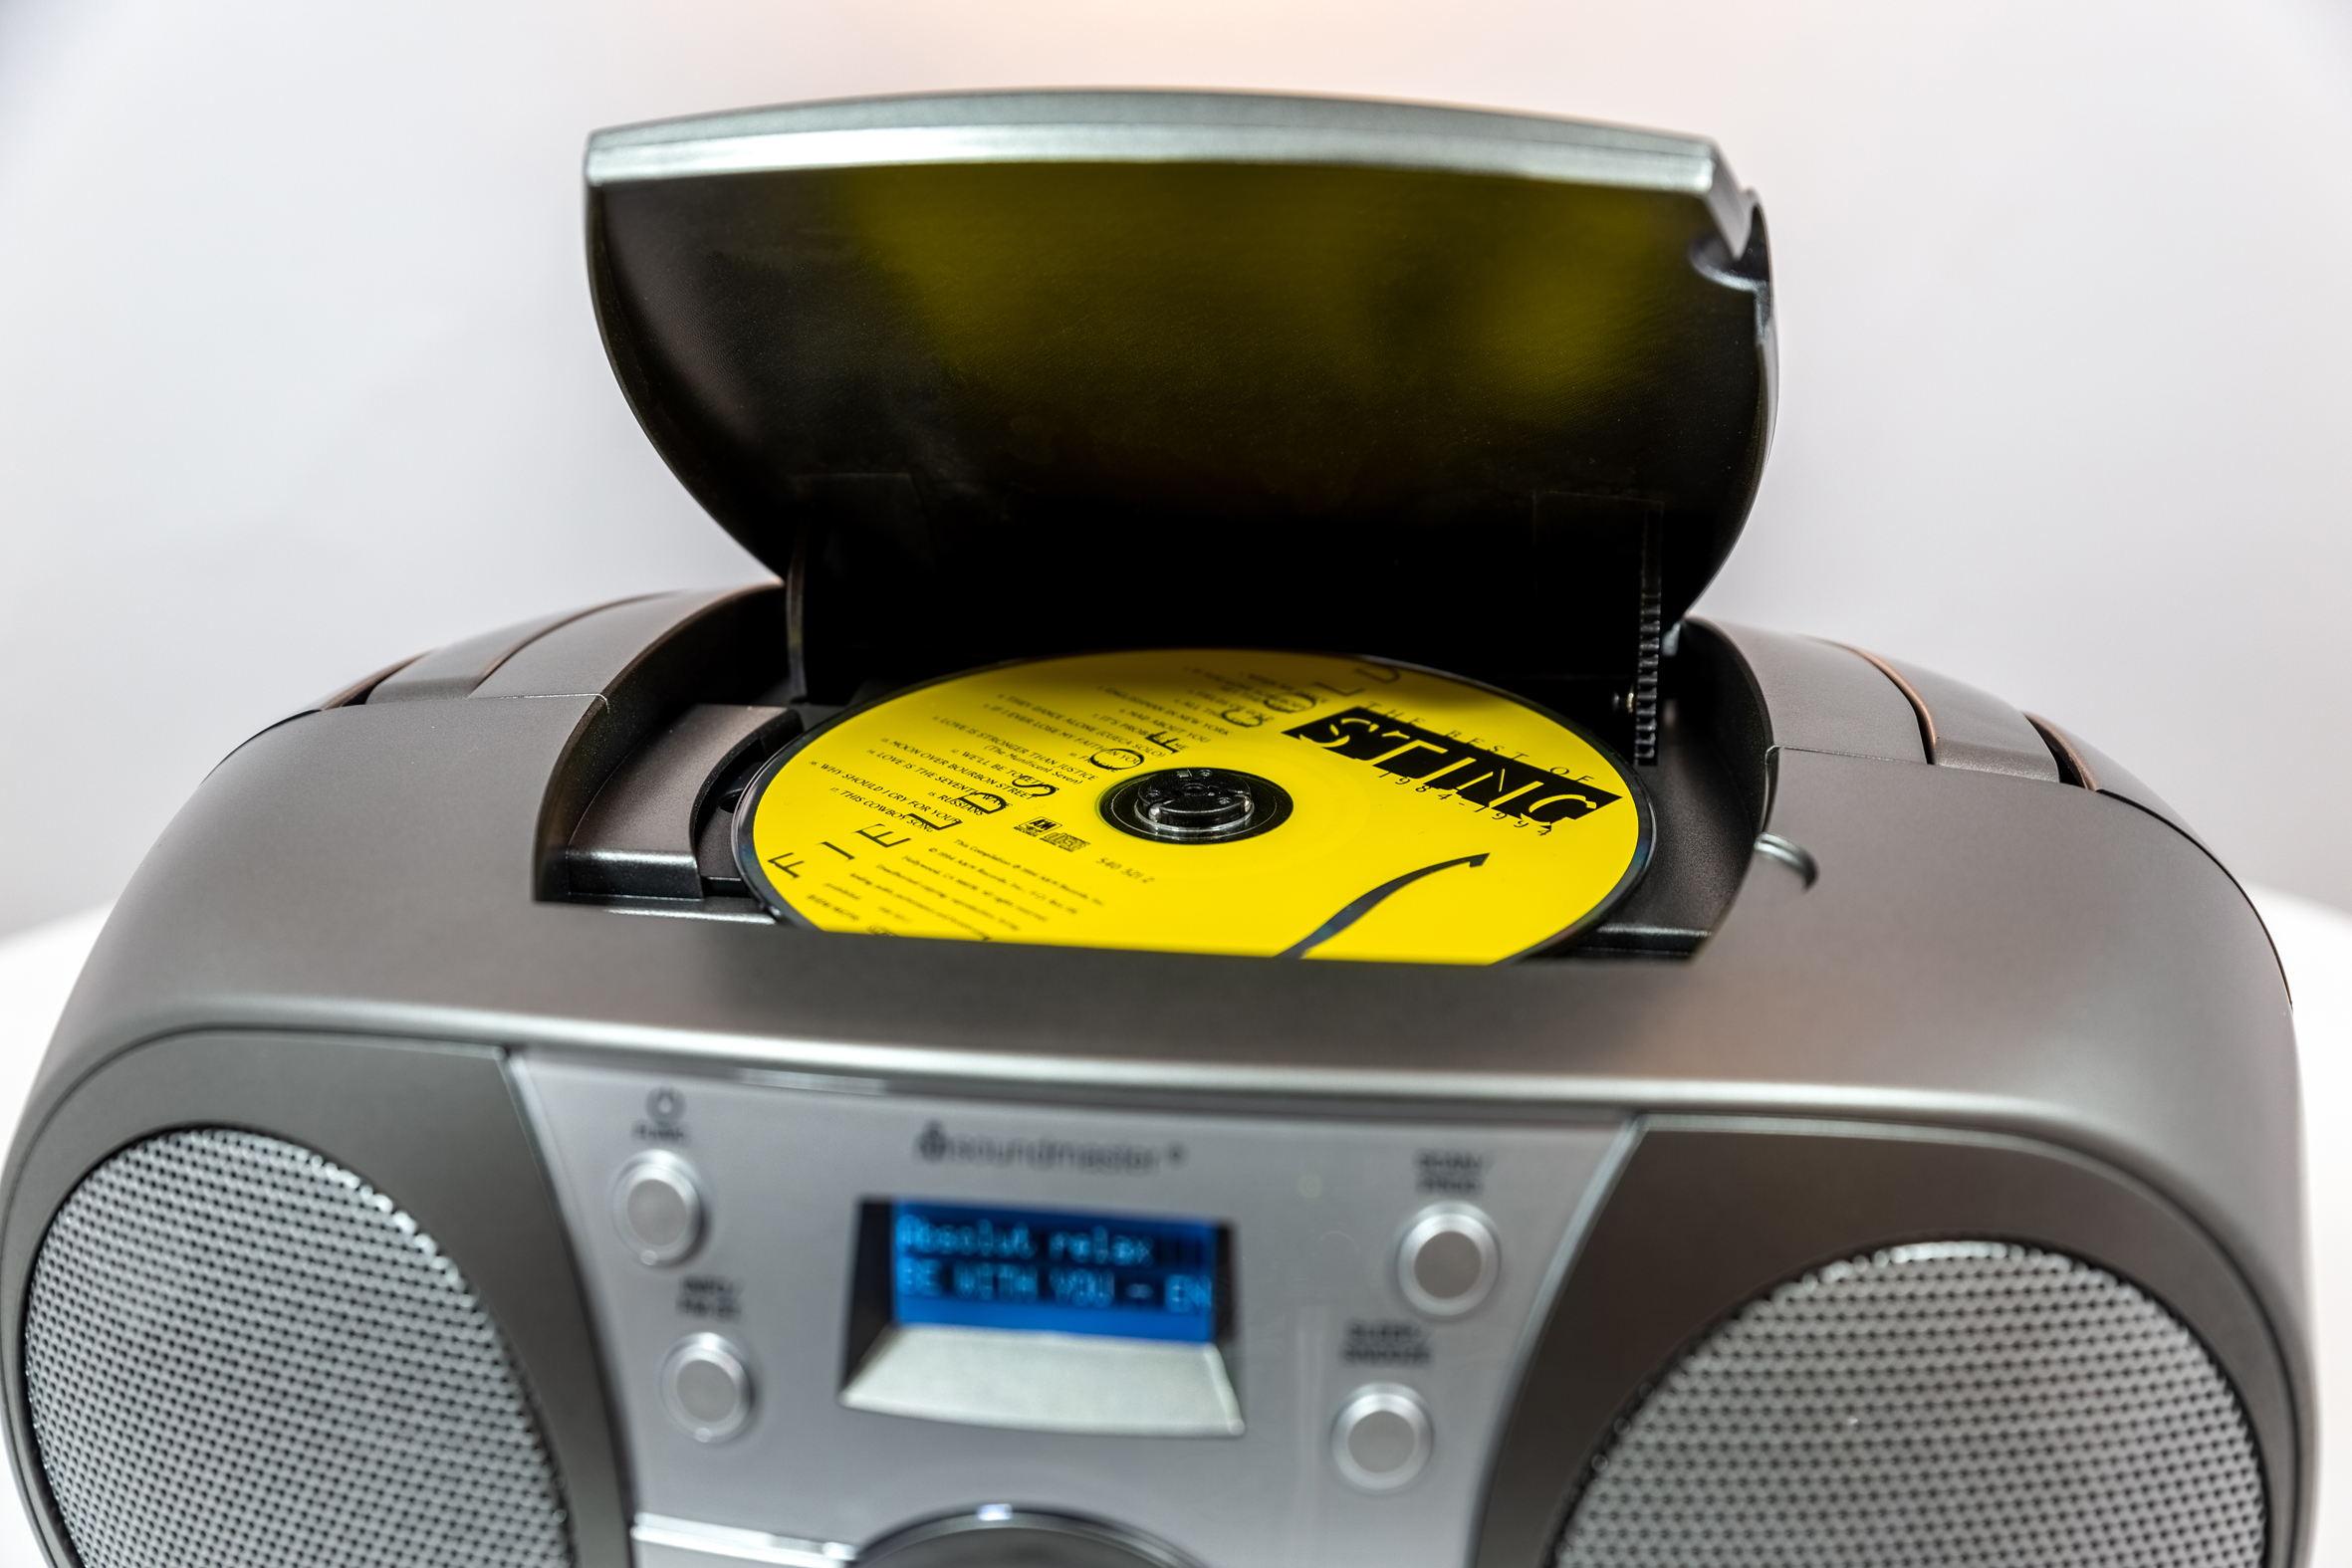 UKW Boombox mit CD MP3 Bluetooth und USB Anschluss Soundmaster SCD1800TI DAB